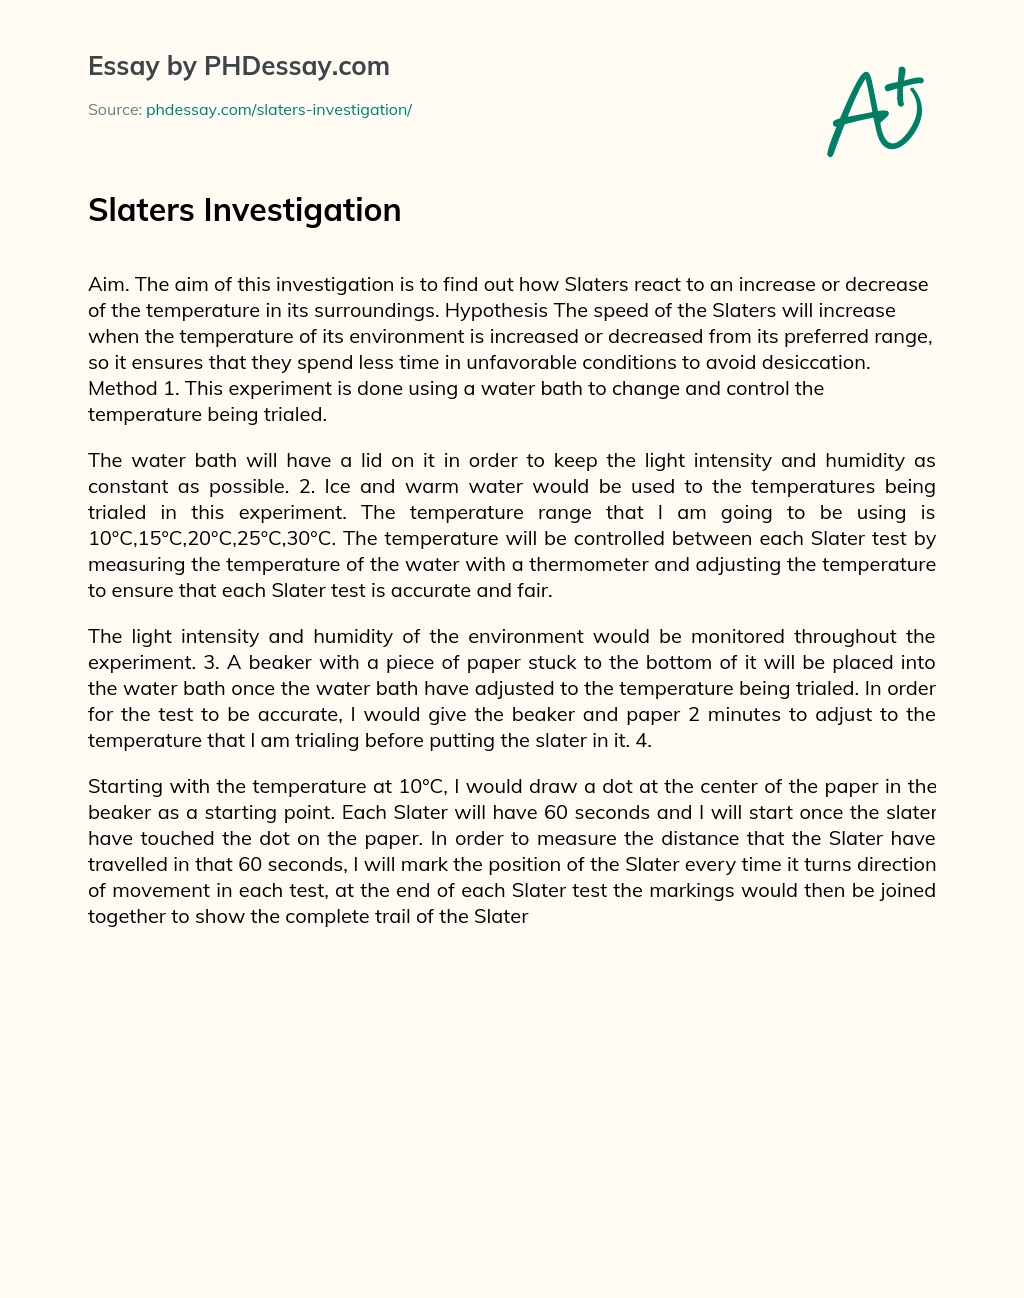 Slaters Investigation essay